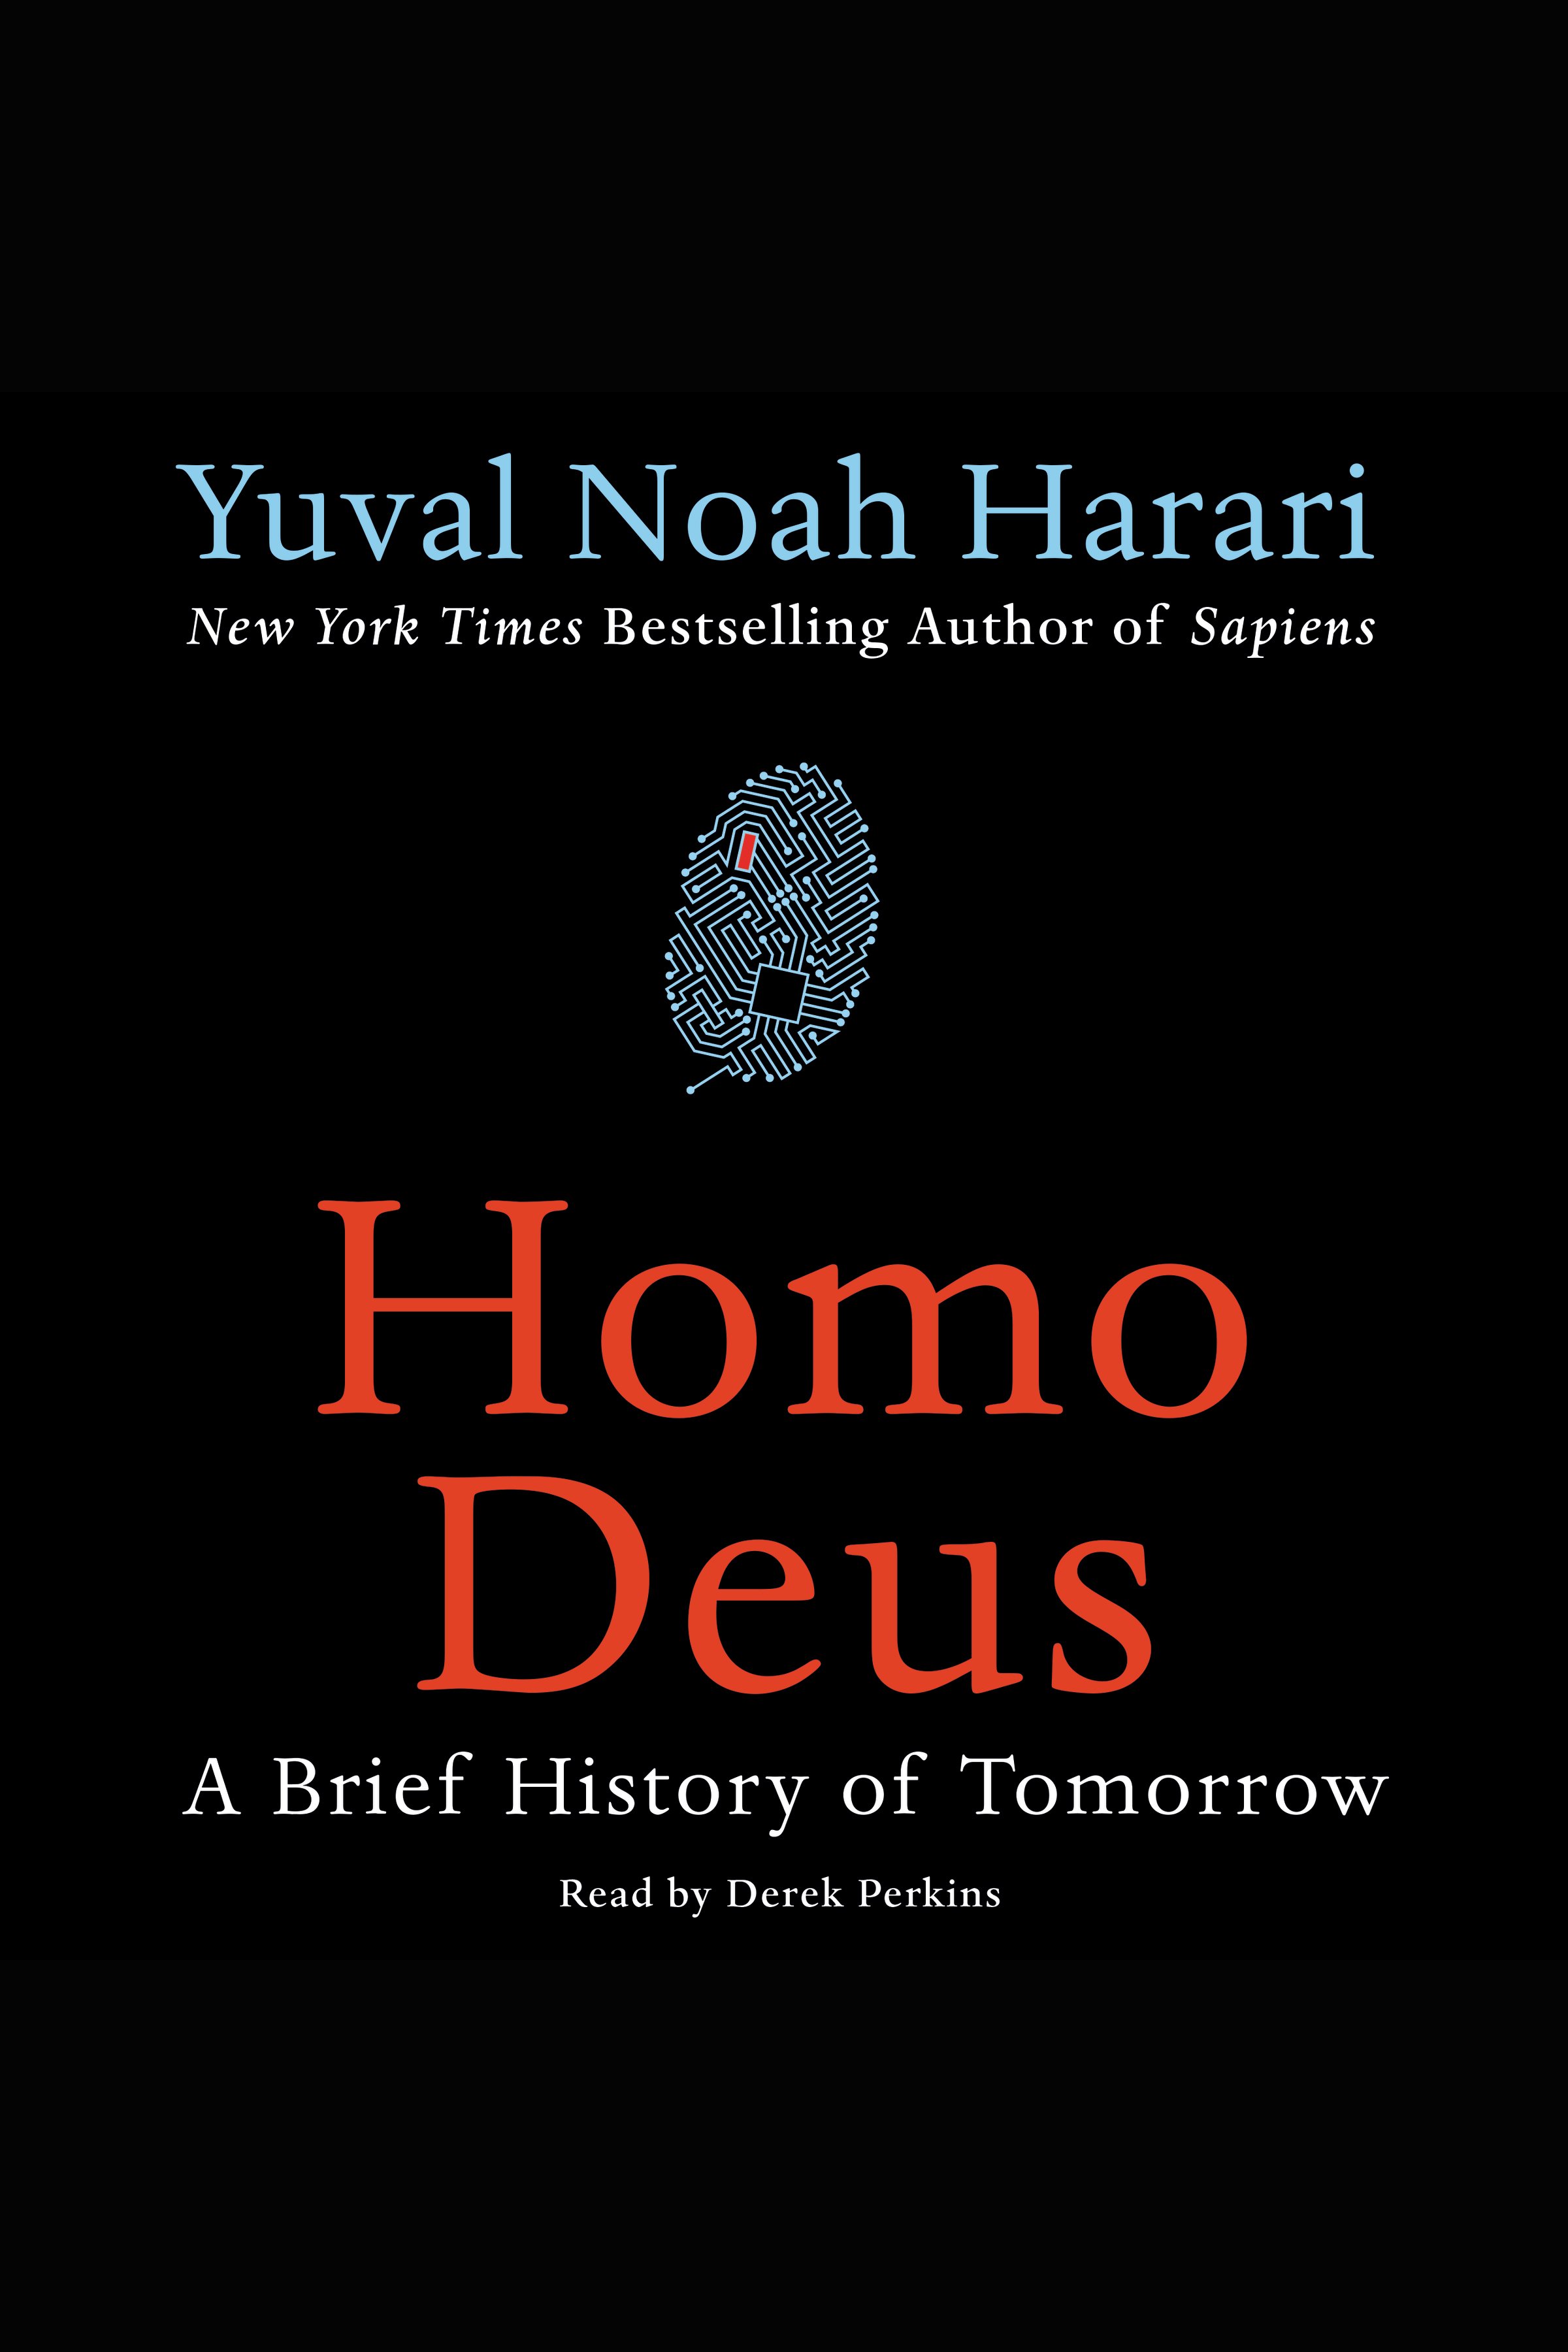 Homo deus a brief history of tomorrow cover image